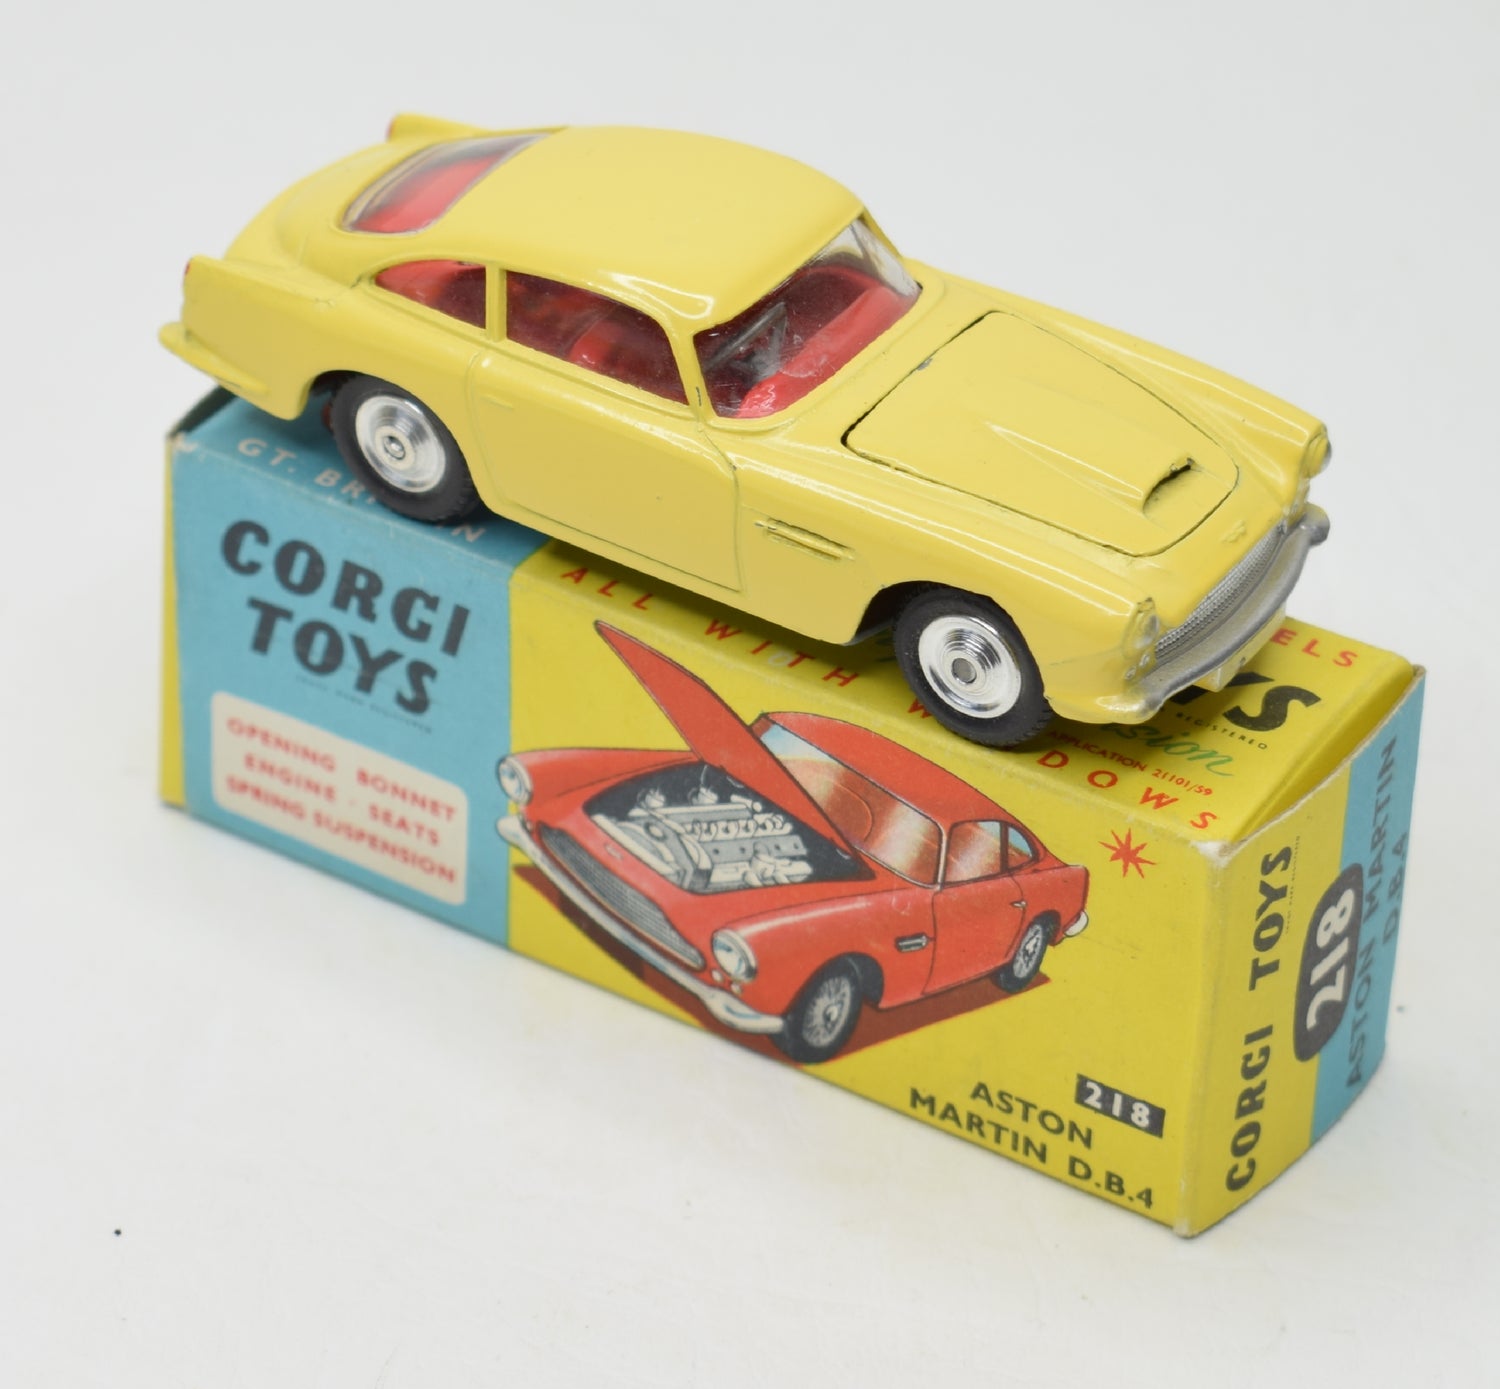 Corgi toys 218 Aston Martin D.B.4 Virtually Mint/Boxed 'Cotswold' Collection Part 2